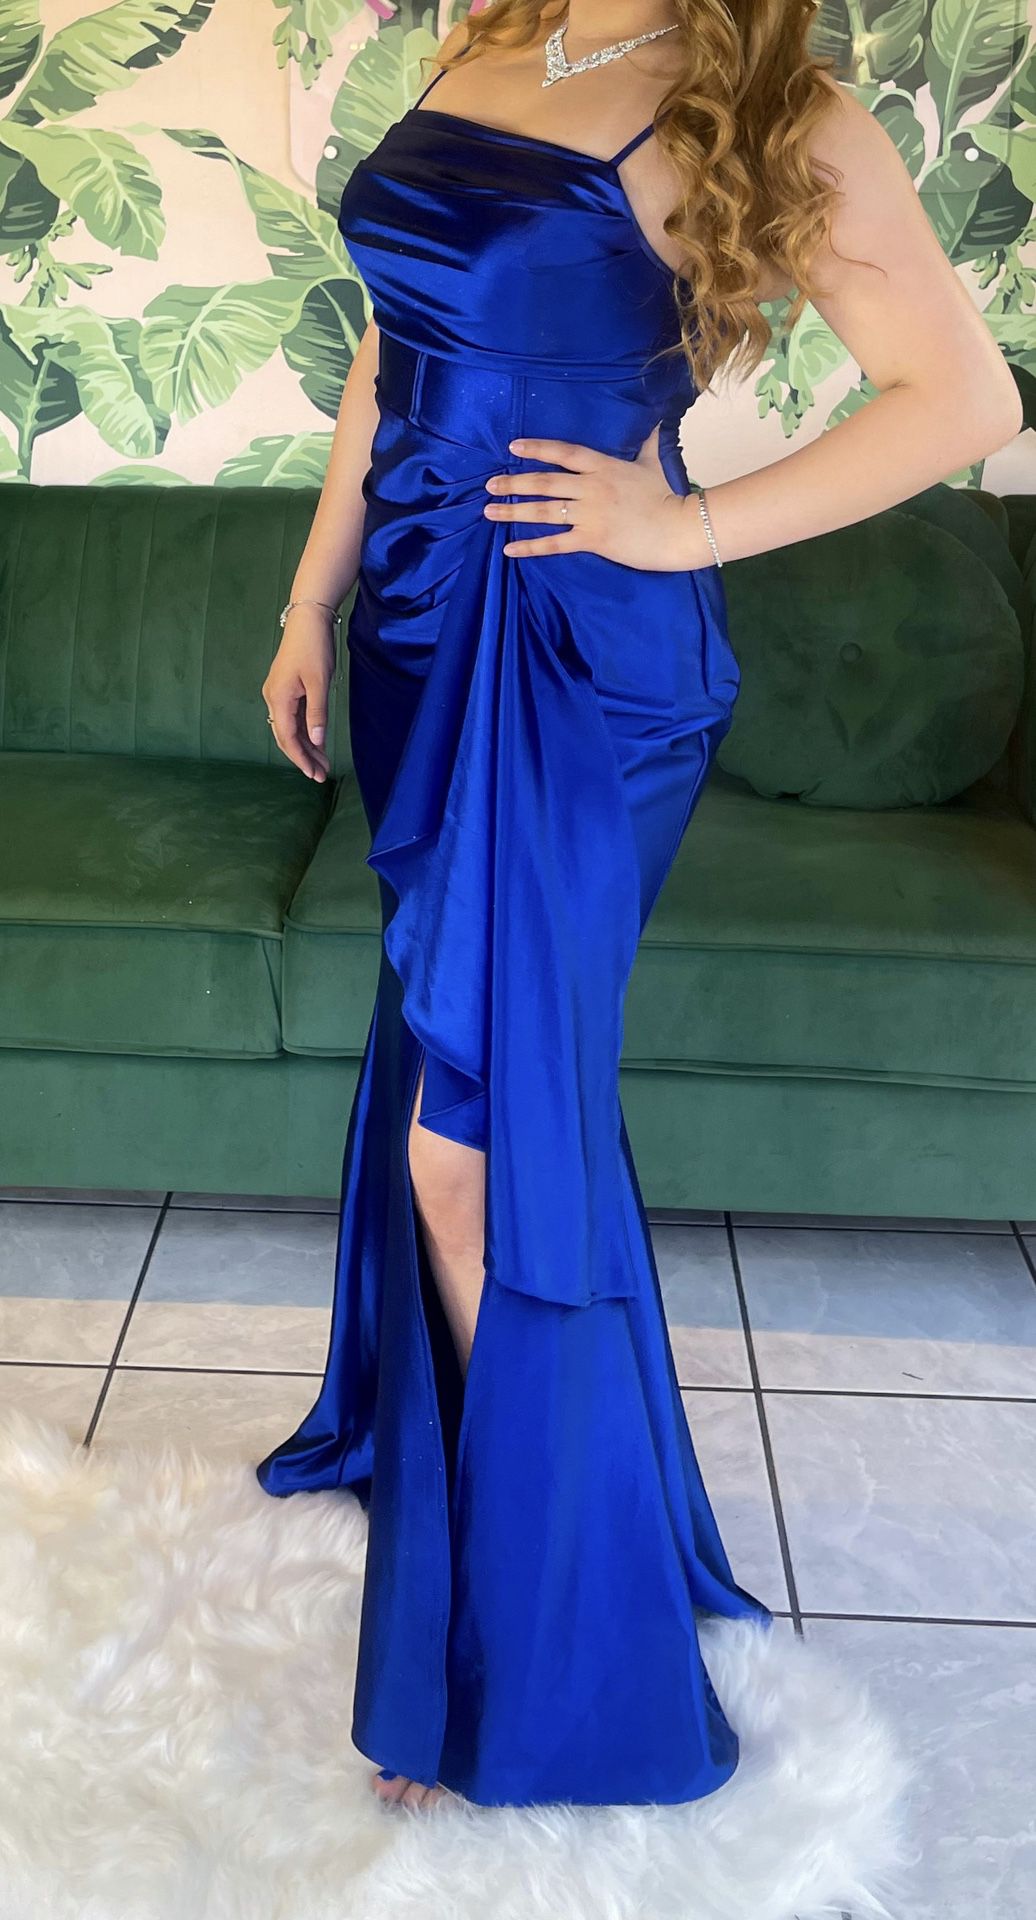 Royal Blue Long Dress 